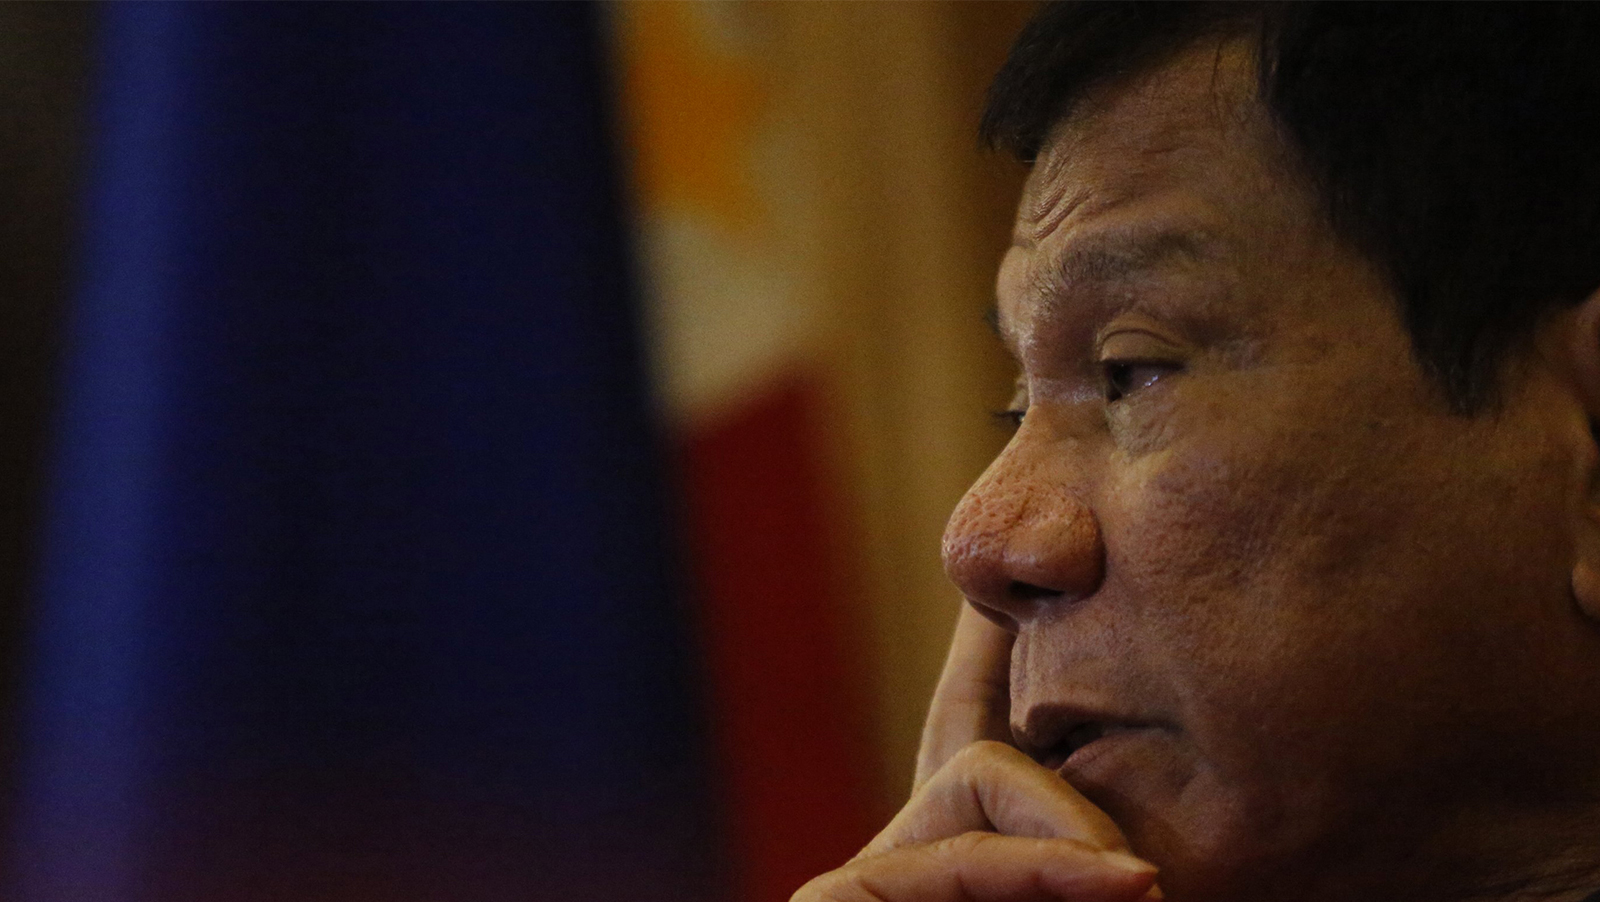 Philippines president suddenly softens stance on gambling